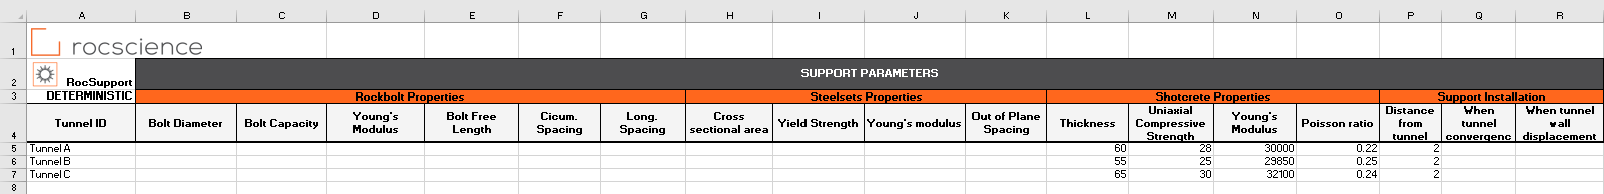 Support Parameters worksheet